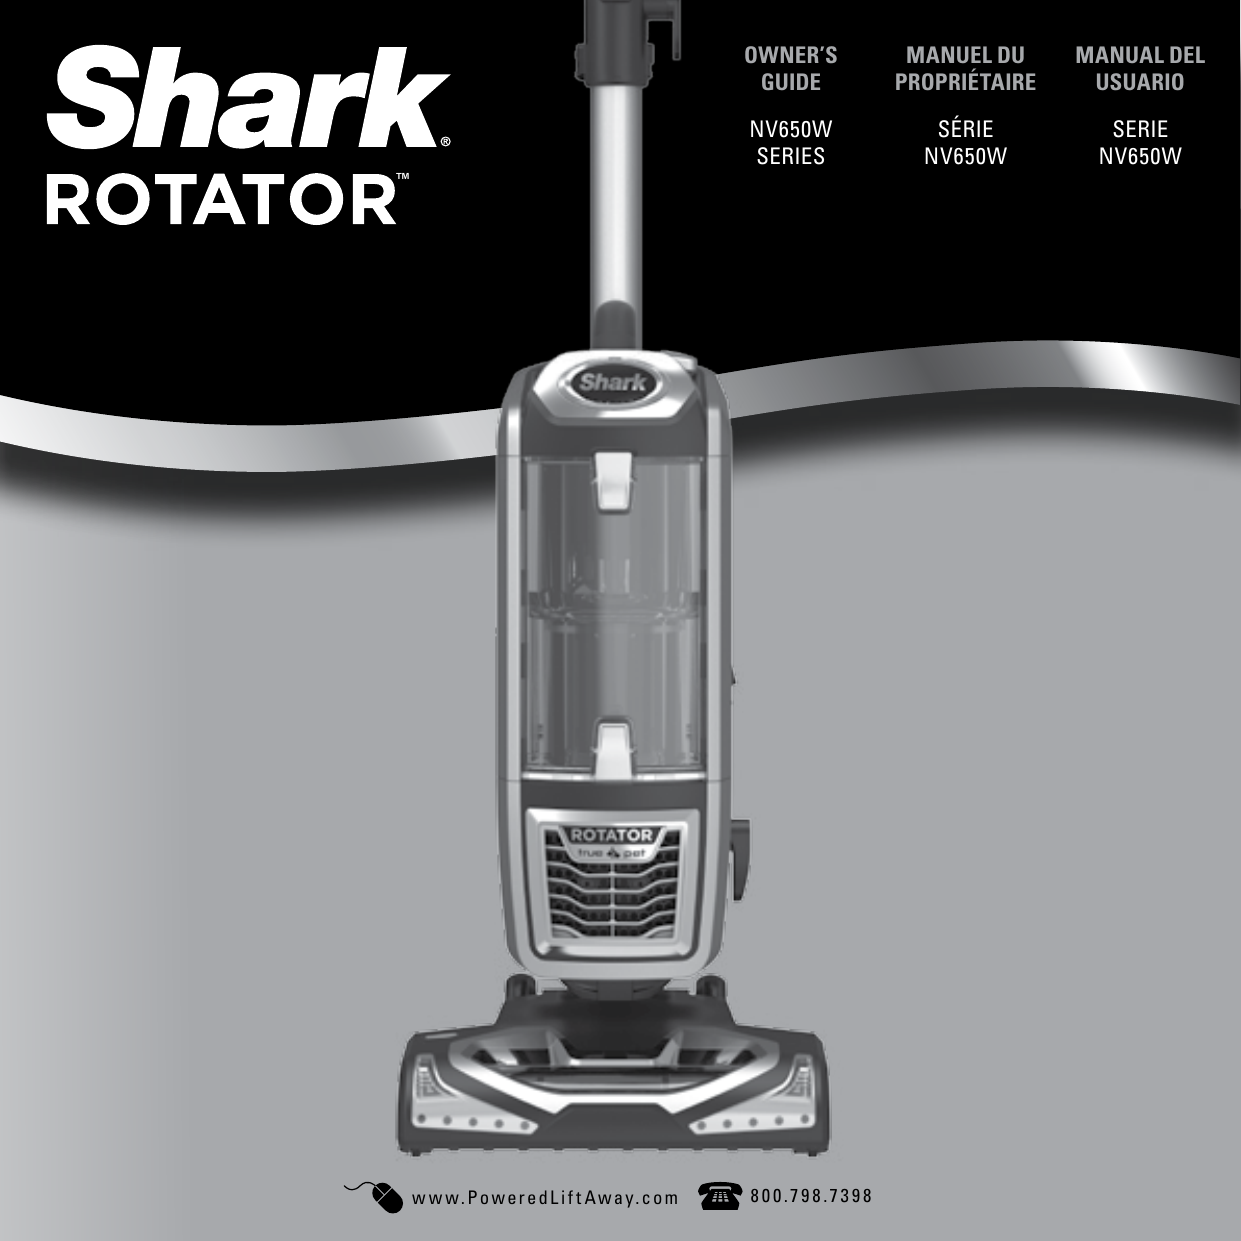 Page 1 of 11 - Shark Shark-Shark-Rotator-Powered-Lift-Away-Upright-Vacuum-Nv650W-Owners-Guide-  Shark-shark-rotator-powered-lift-away-upright-vacuum-nv650w-owners-guide